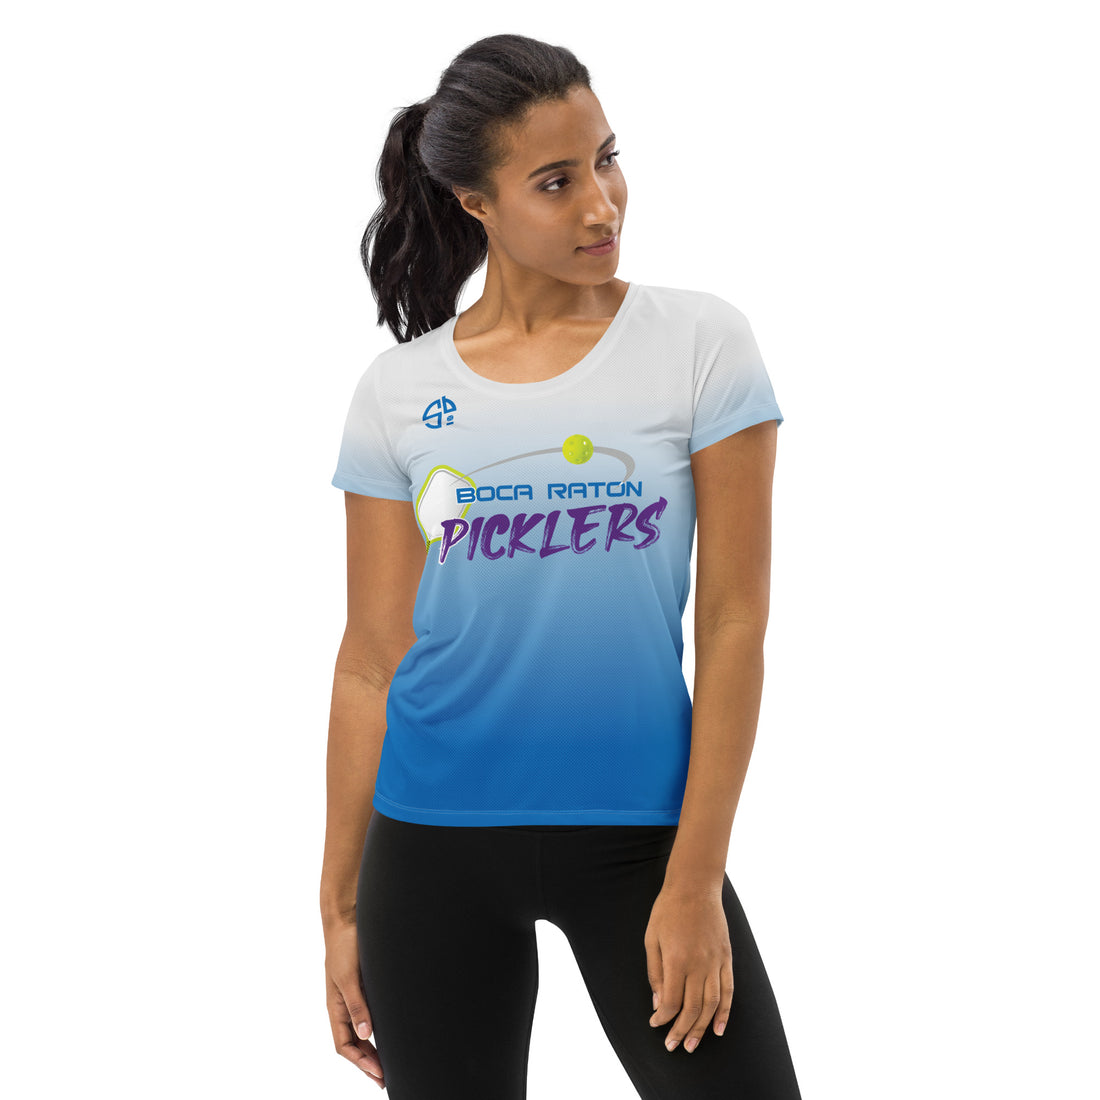 Scott Johnston 30 Boca Raton Picklers™ SKYblue™ Women's Short Sleeve Fan Jersey - Ombre Turquoise